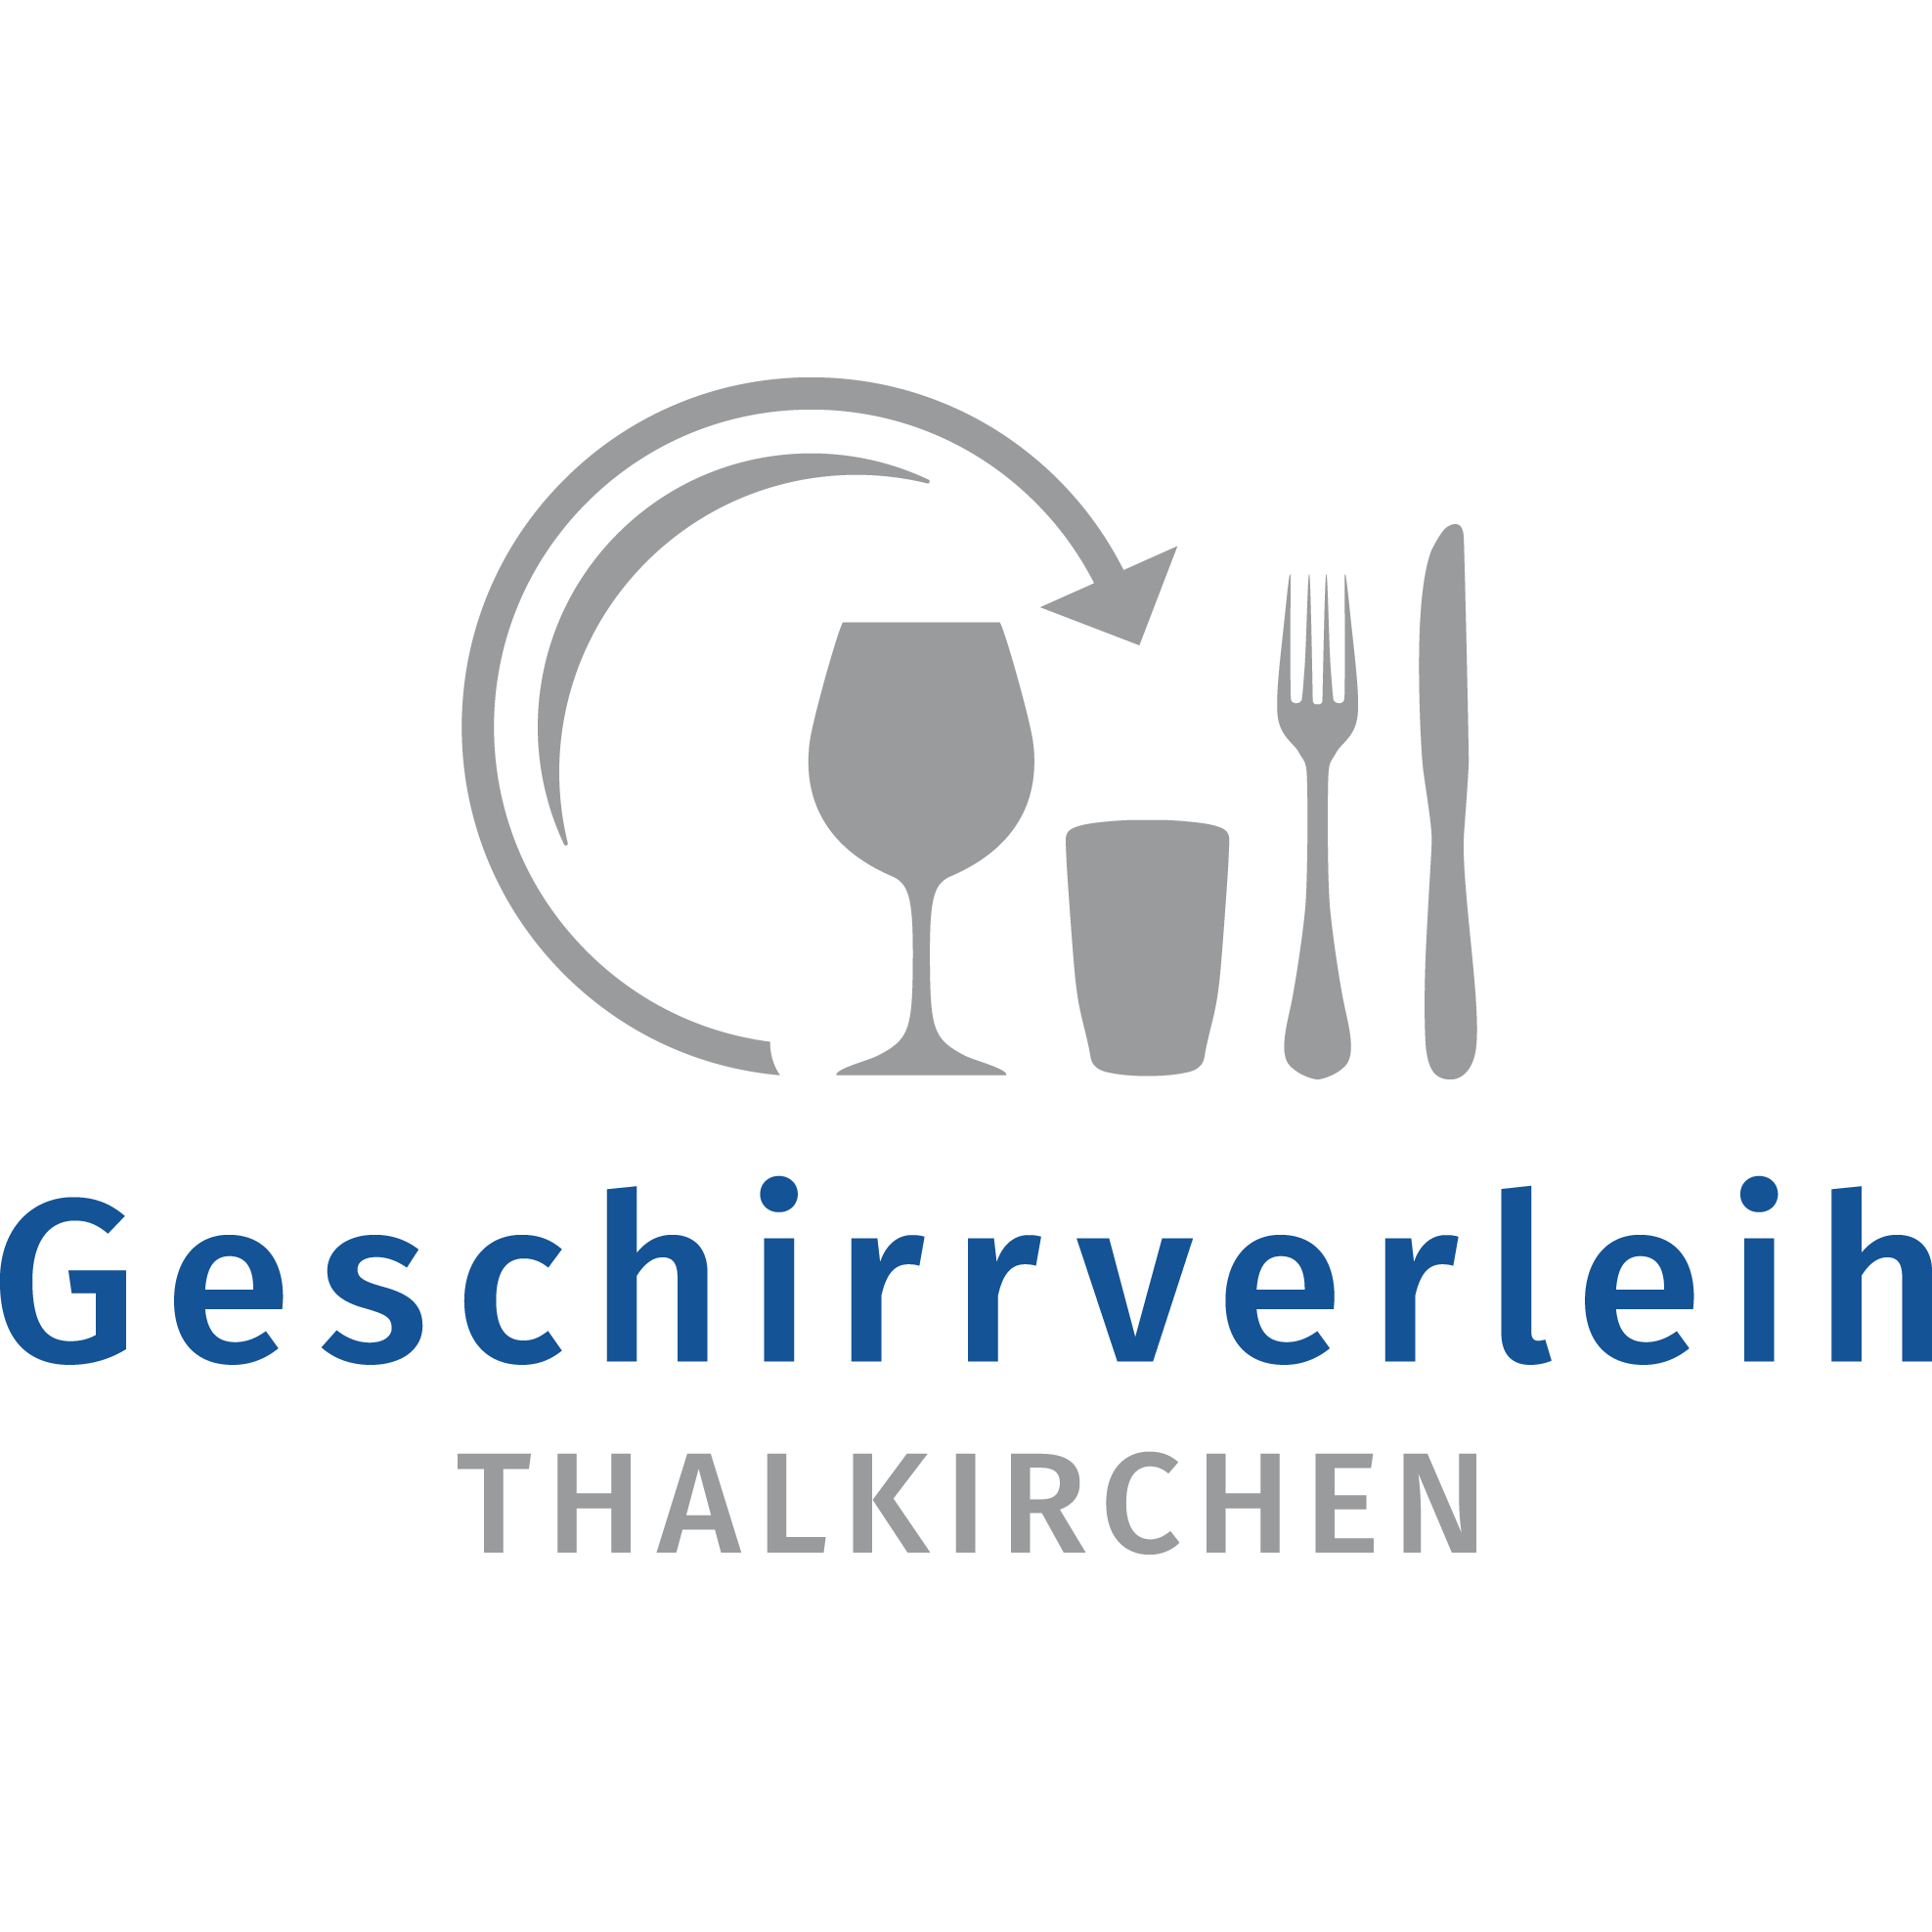 Verleih Thalkirchen Domenico Agostinacchio GmbH in München - Logo